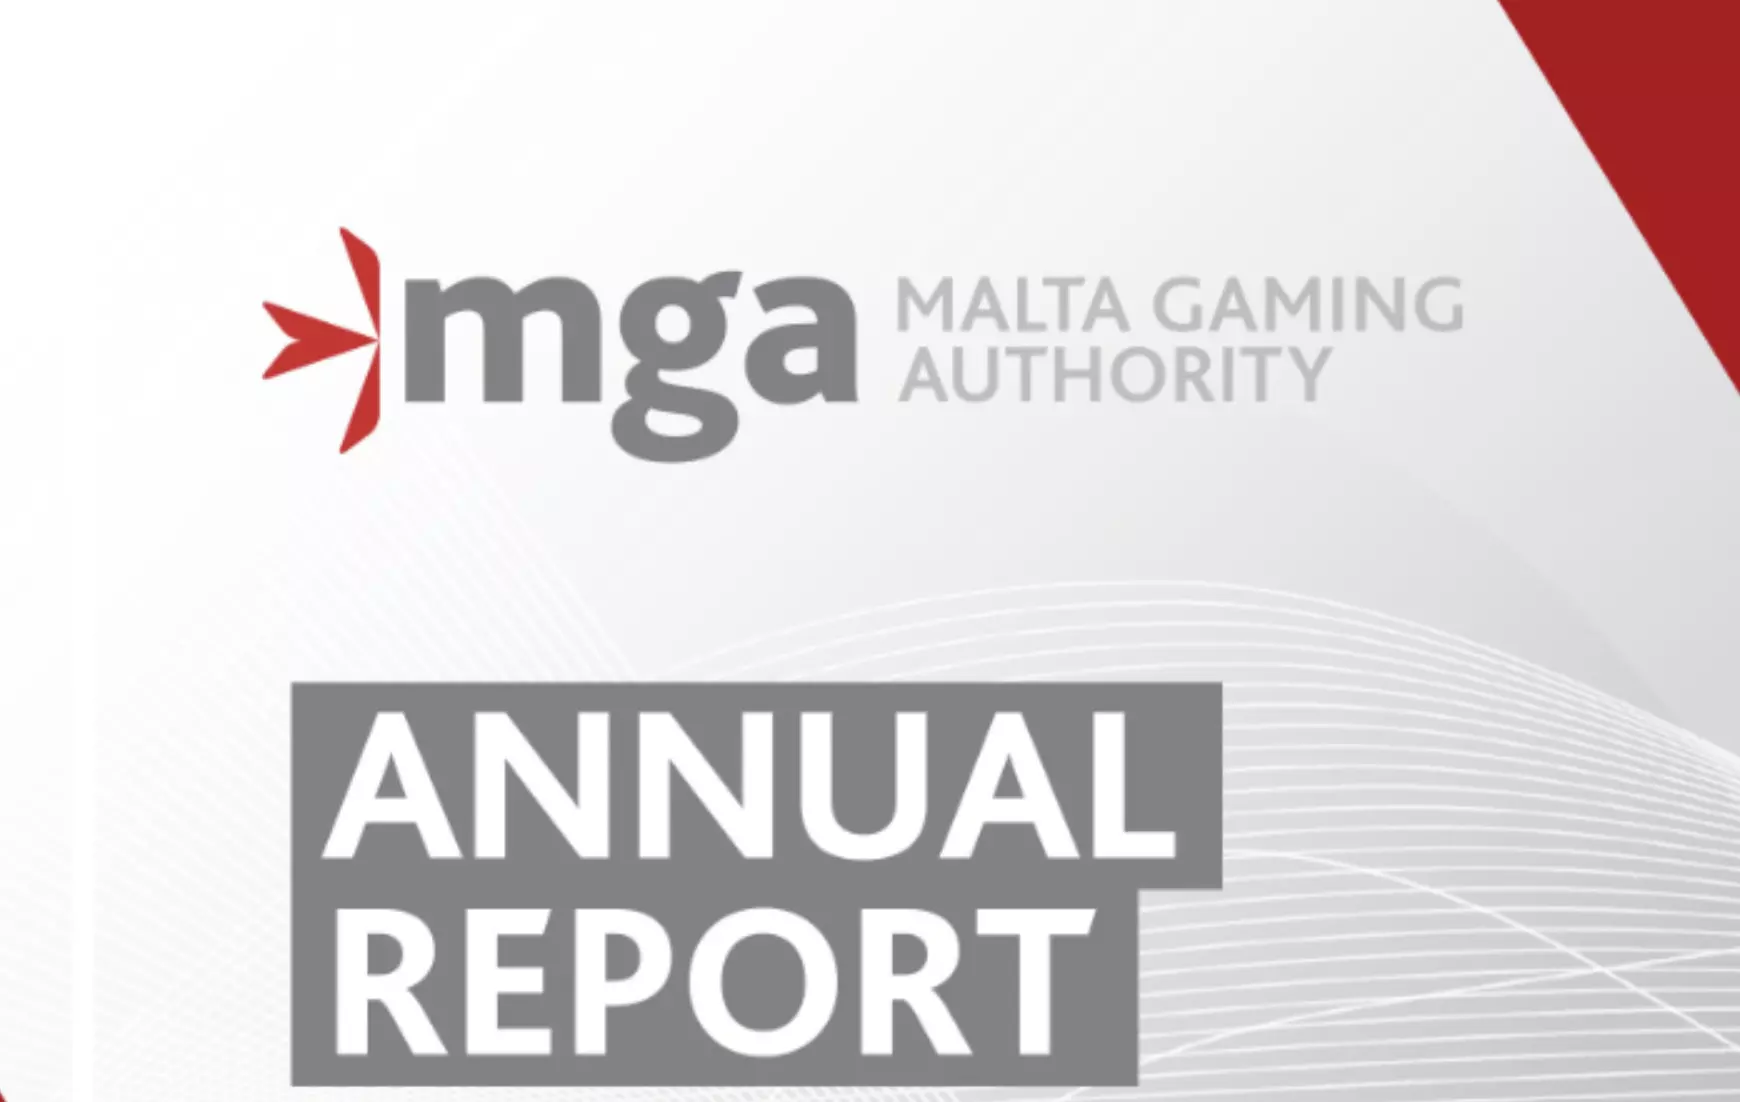 Otoritas Gaming Malta merilis laporan tahunan 2021